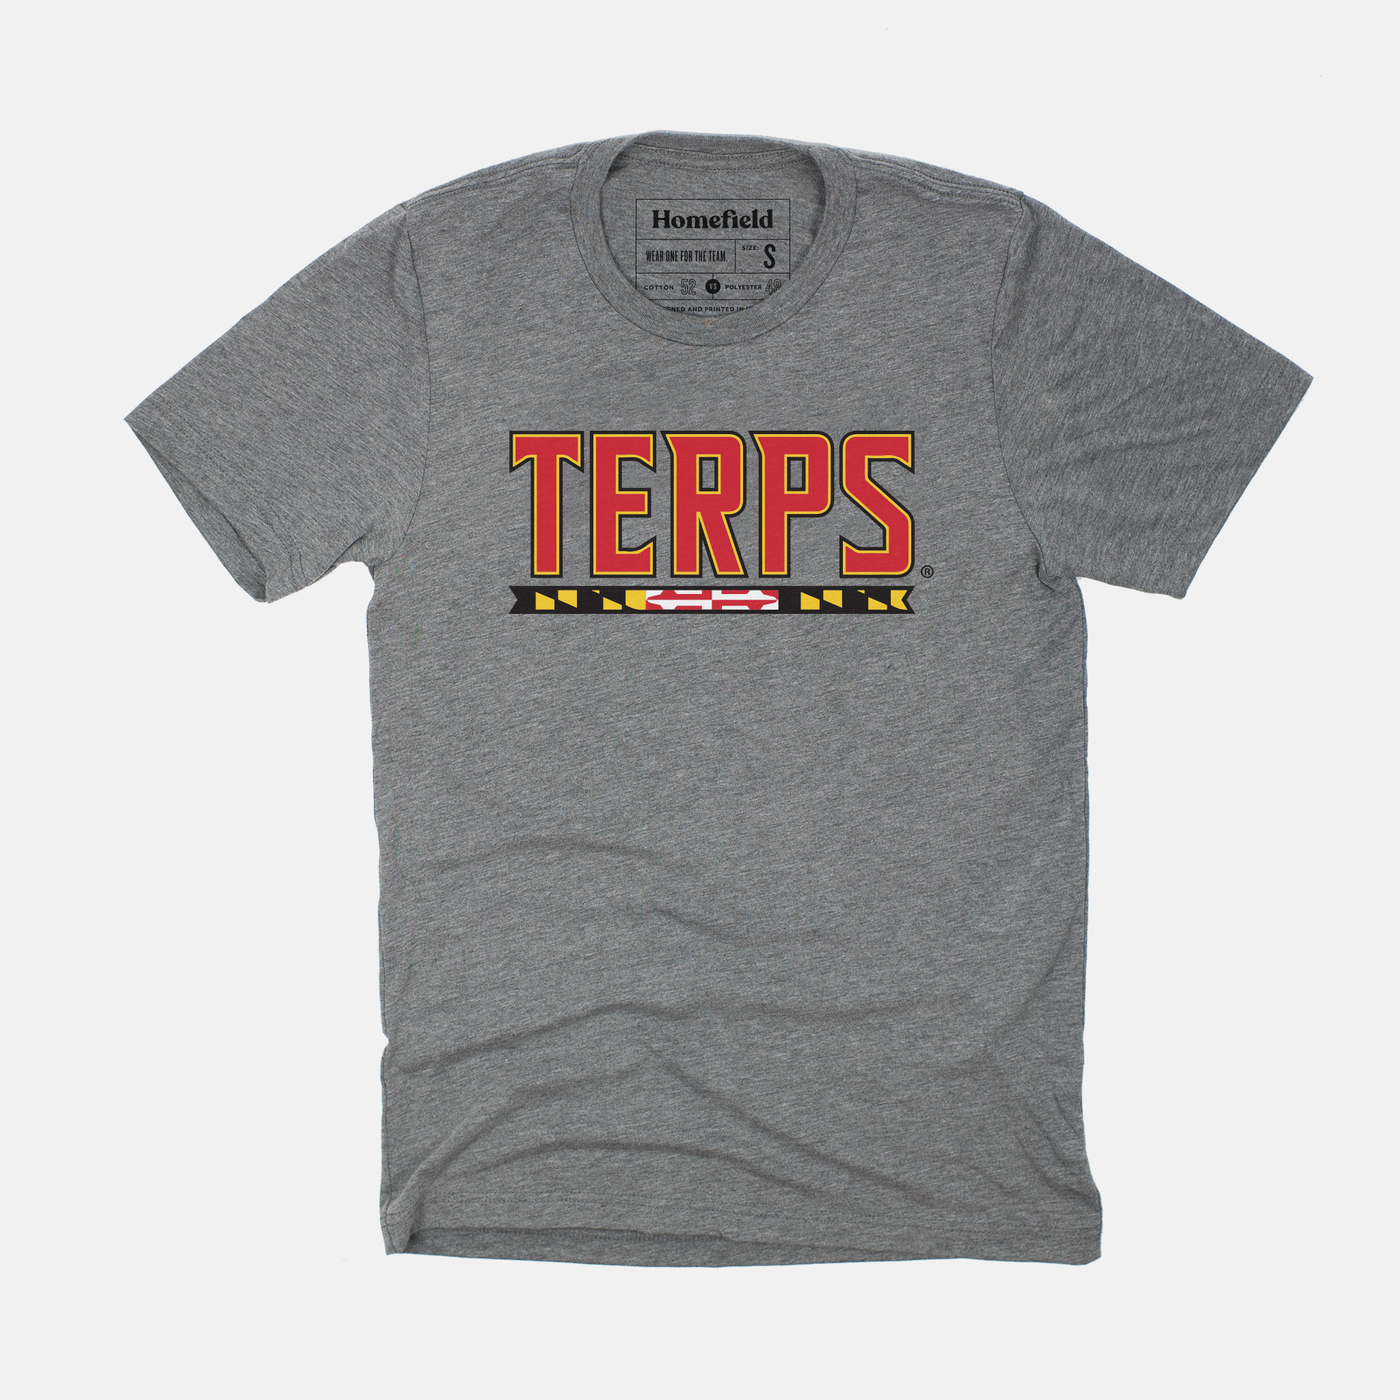 University of Maryland Terps T-Shirt